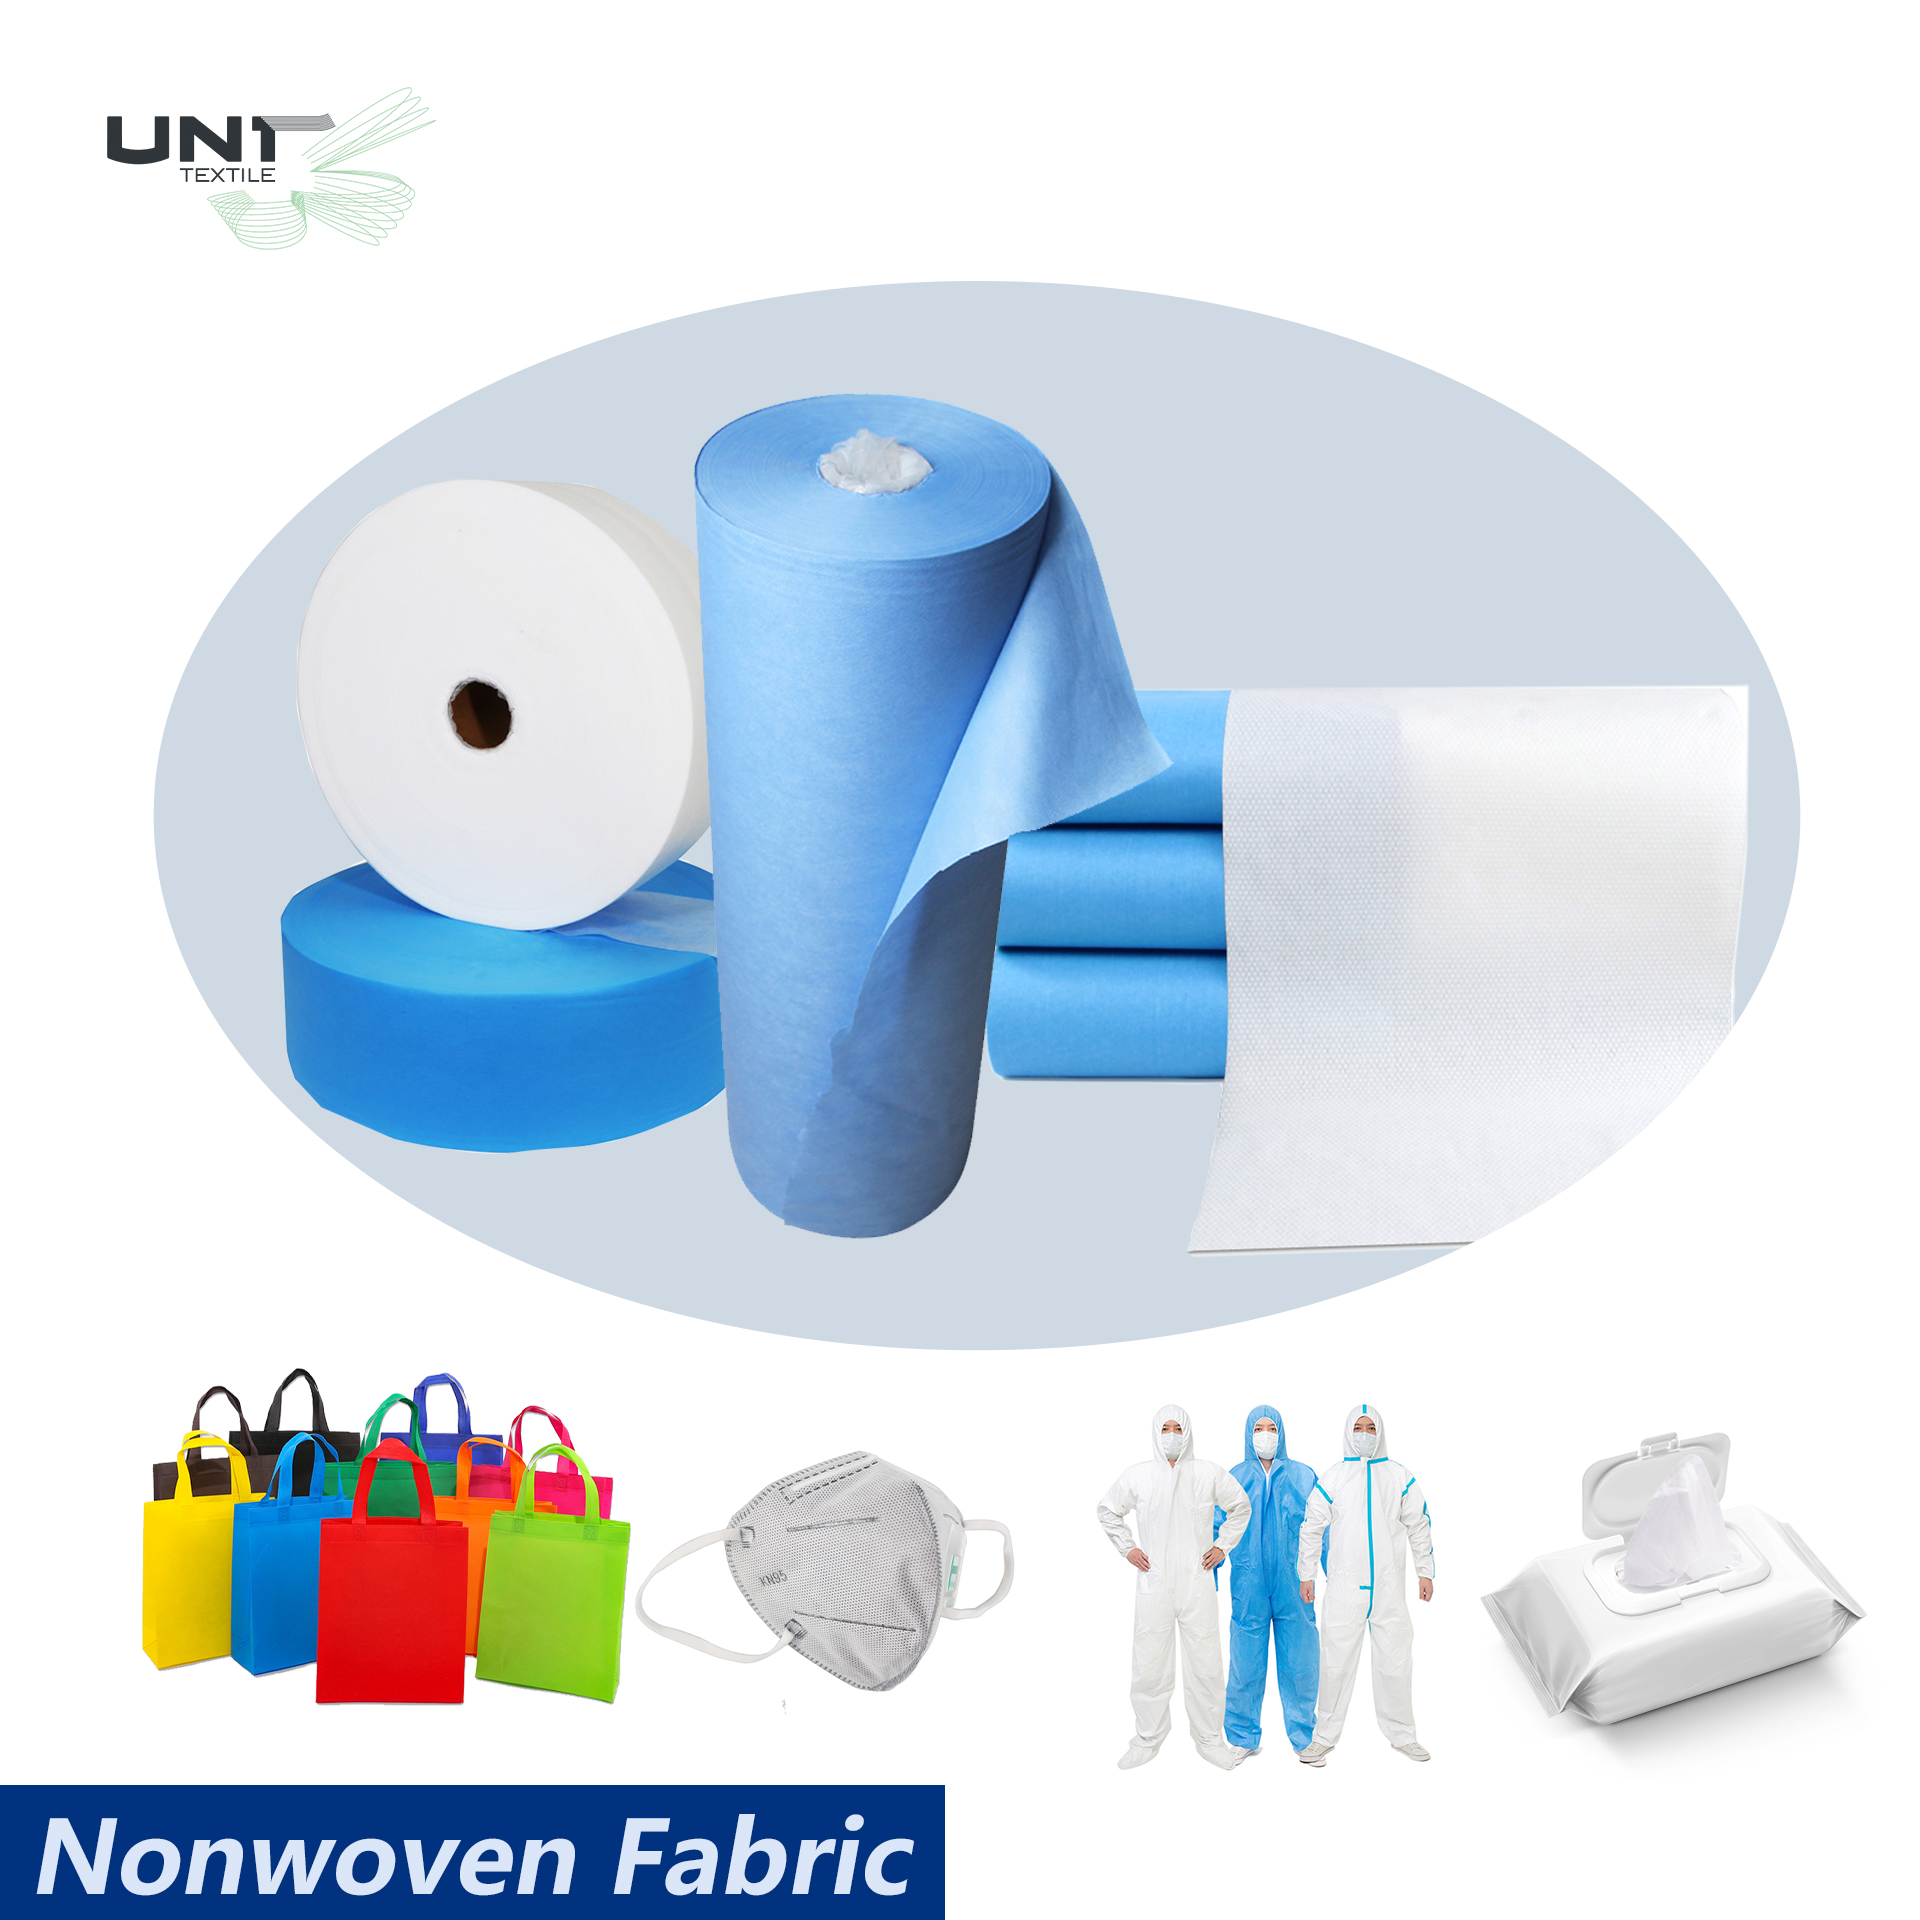 Manufacturer spunbond spunlace pp polypropylene ss meltblown sms non woven nonwoven fabric for face mask bags medical